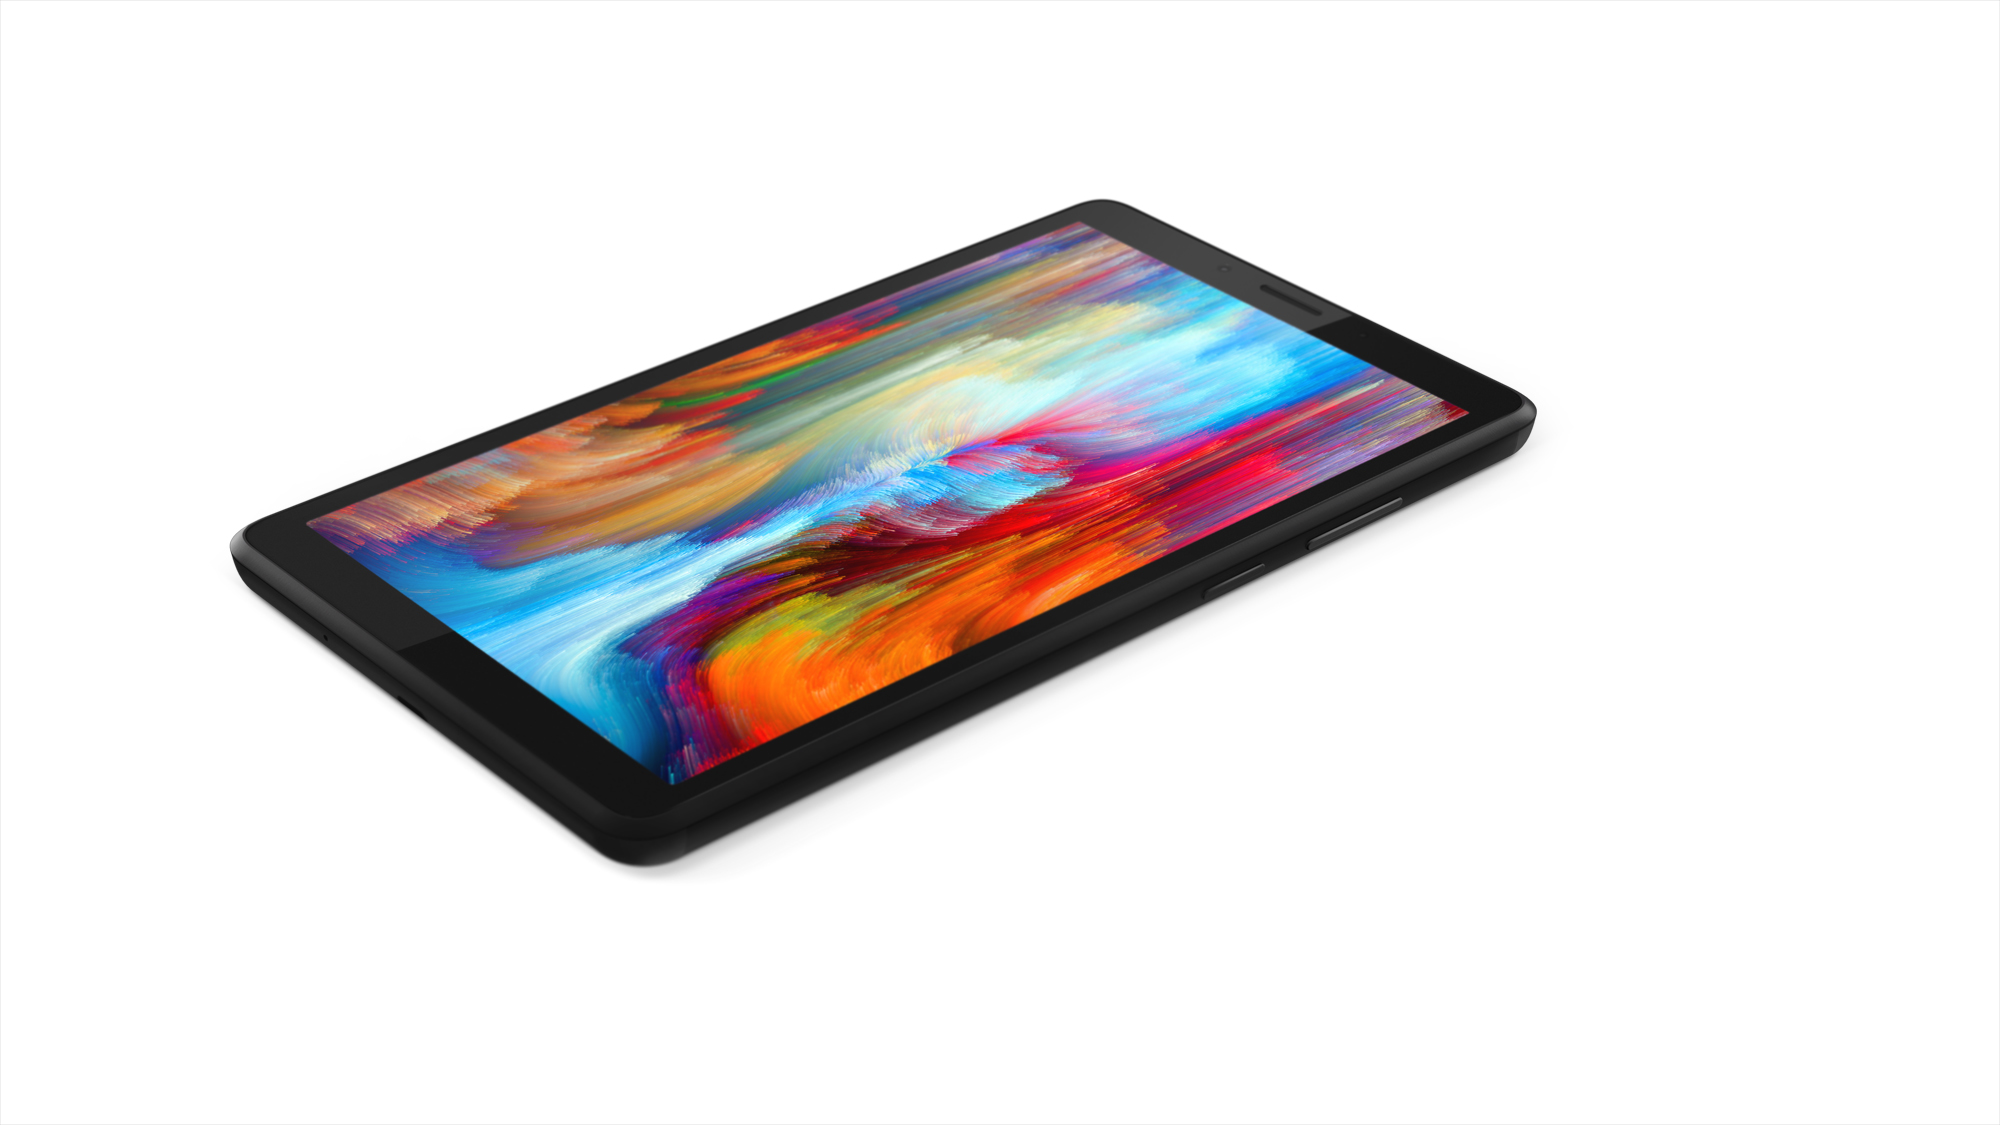 Lenovo Tab M7 7" Tablet, 16GB Storage, 1GB Memory, 1.3GHz Quad-Core Processor, Android 9 Pie Go Edition, HD Display - image 4 of 8